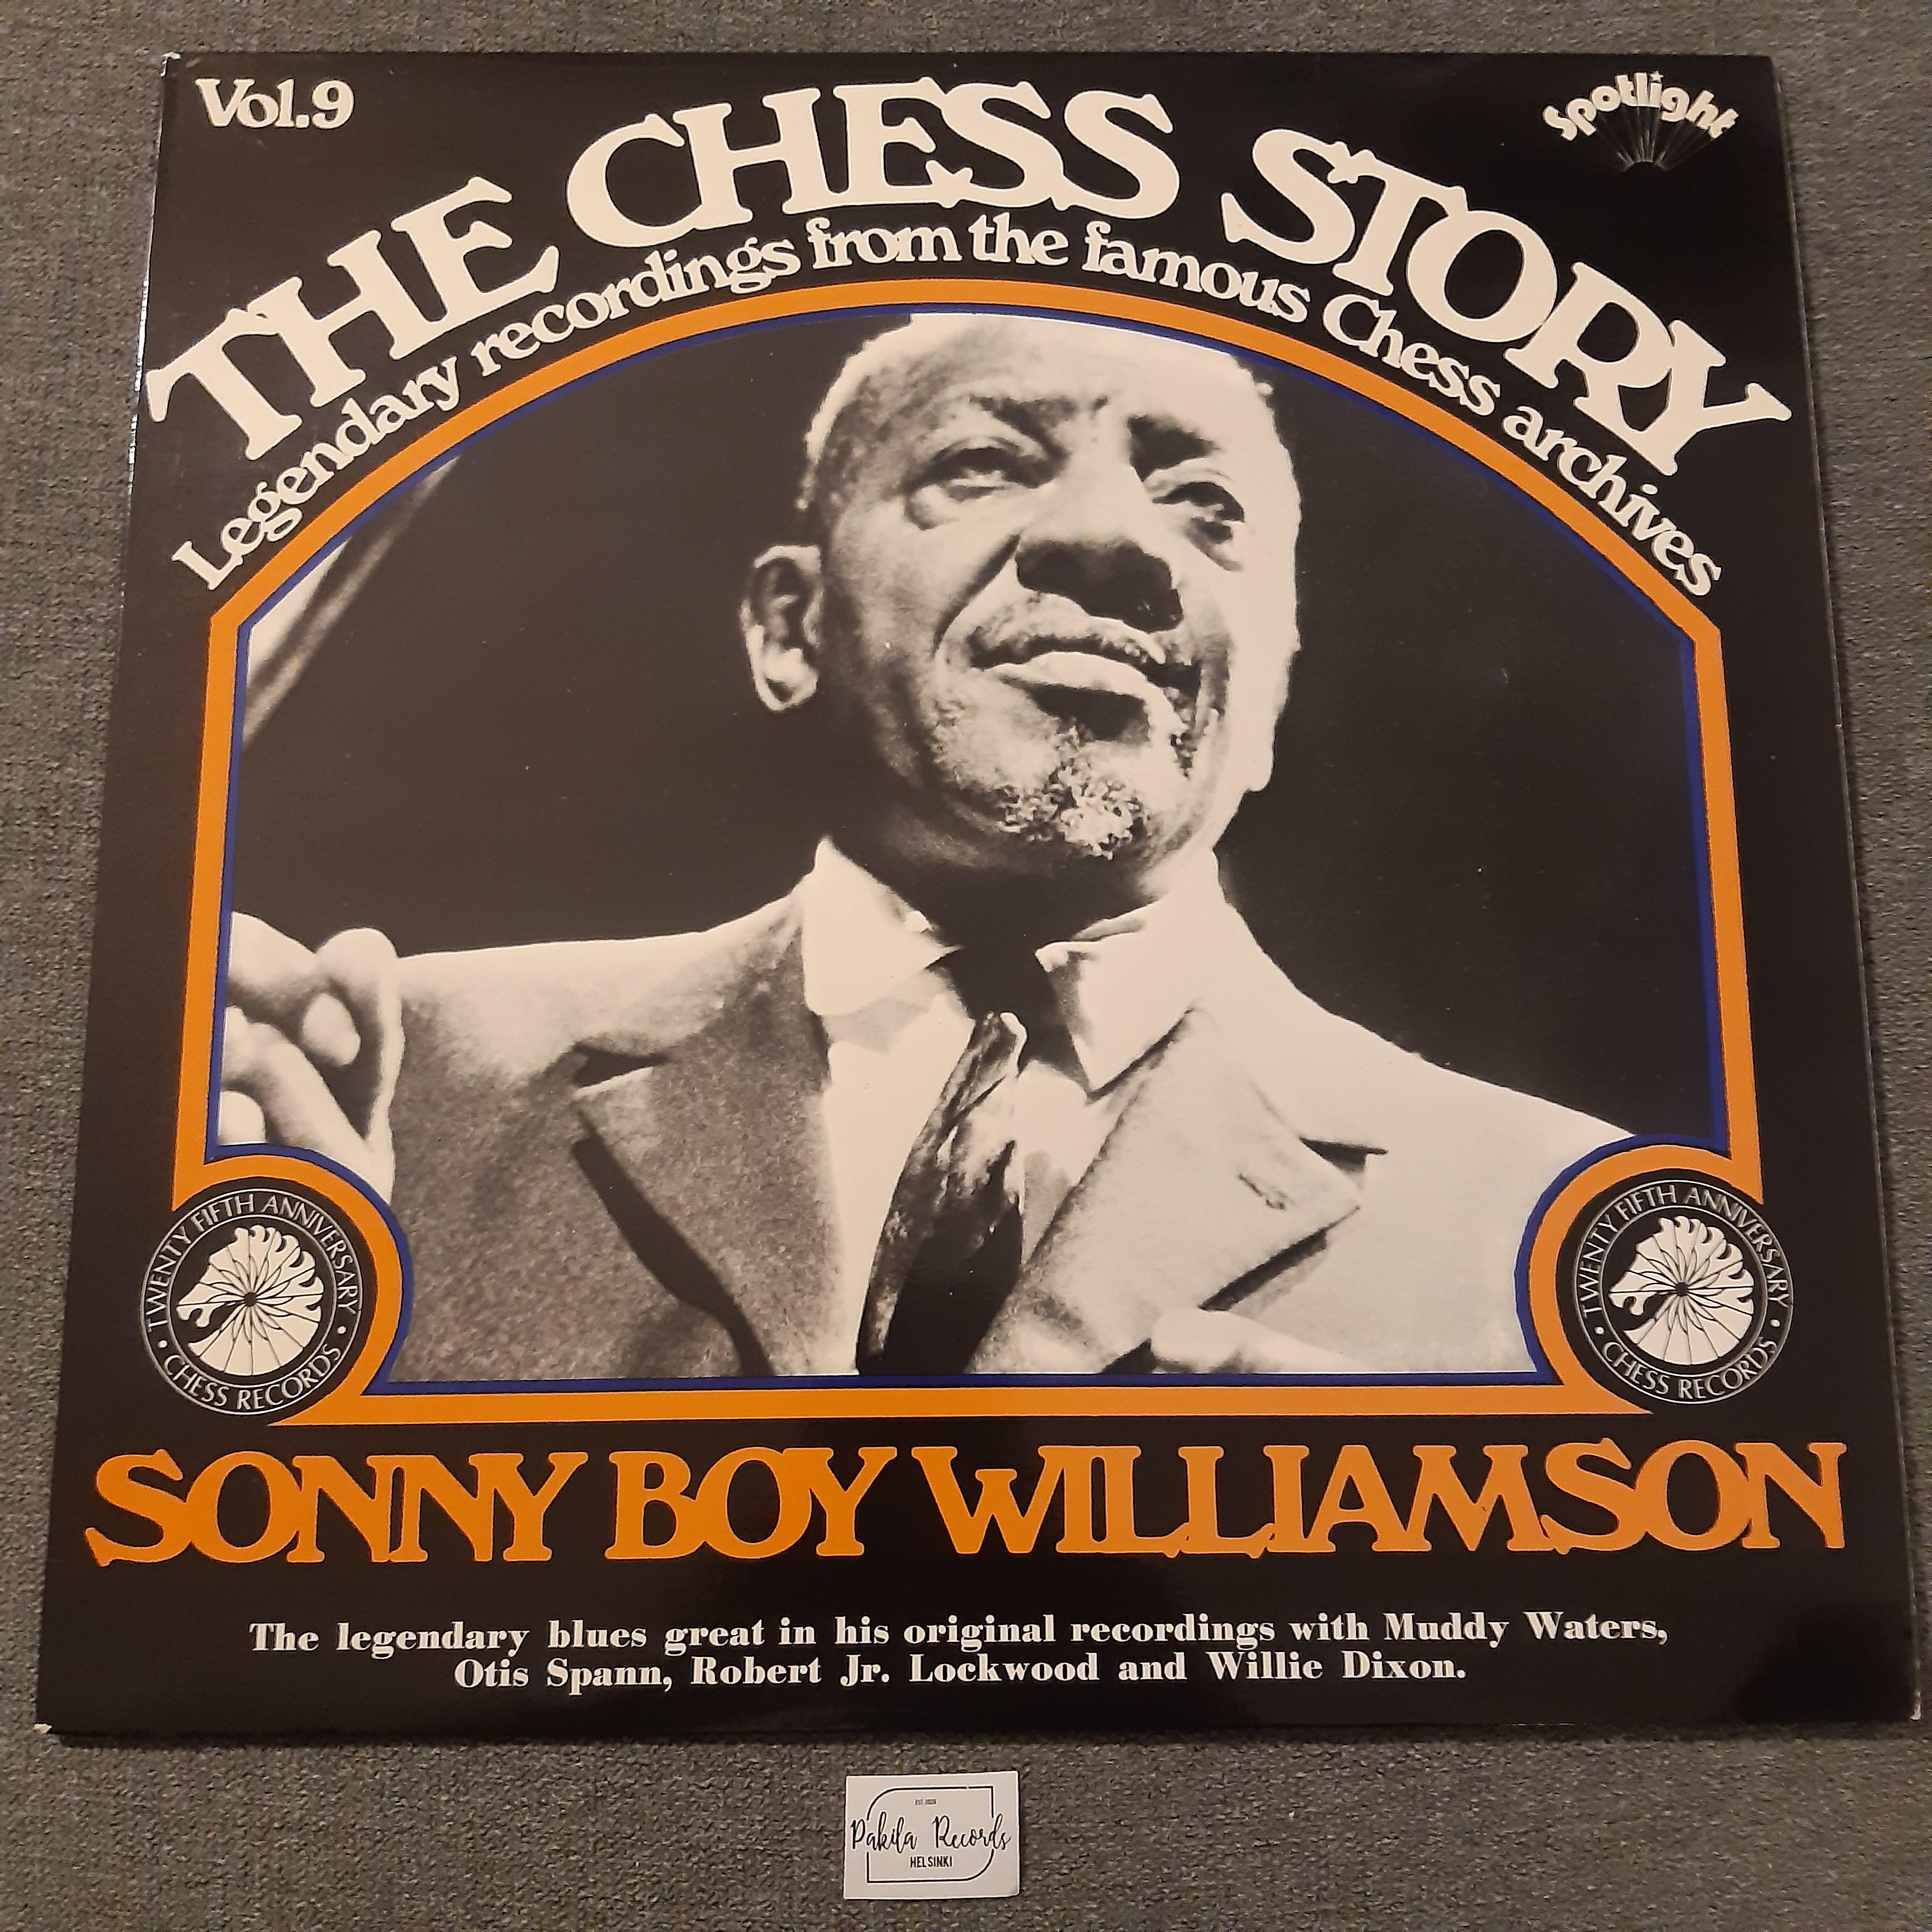 Sonny Boy Williamson - The Chess Story (Vol. 9) - LP (käytetty)